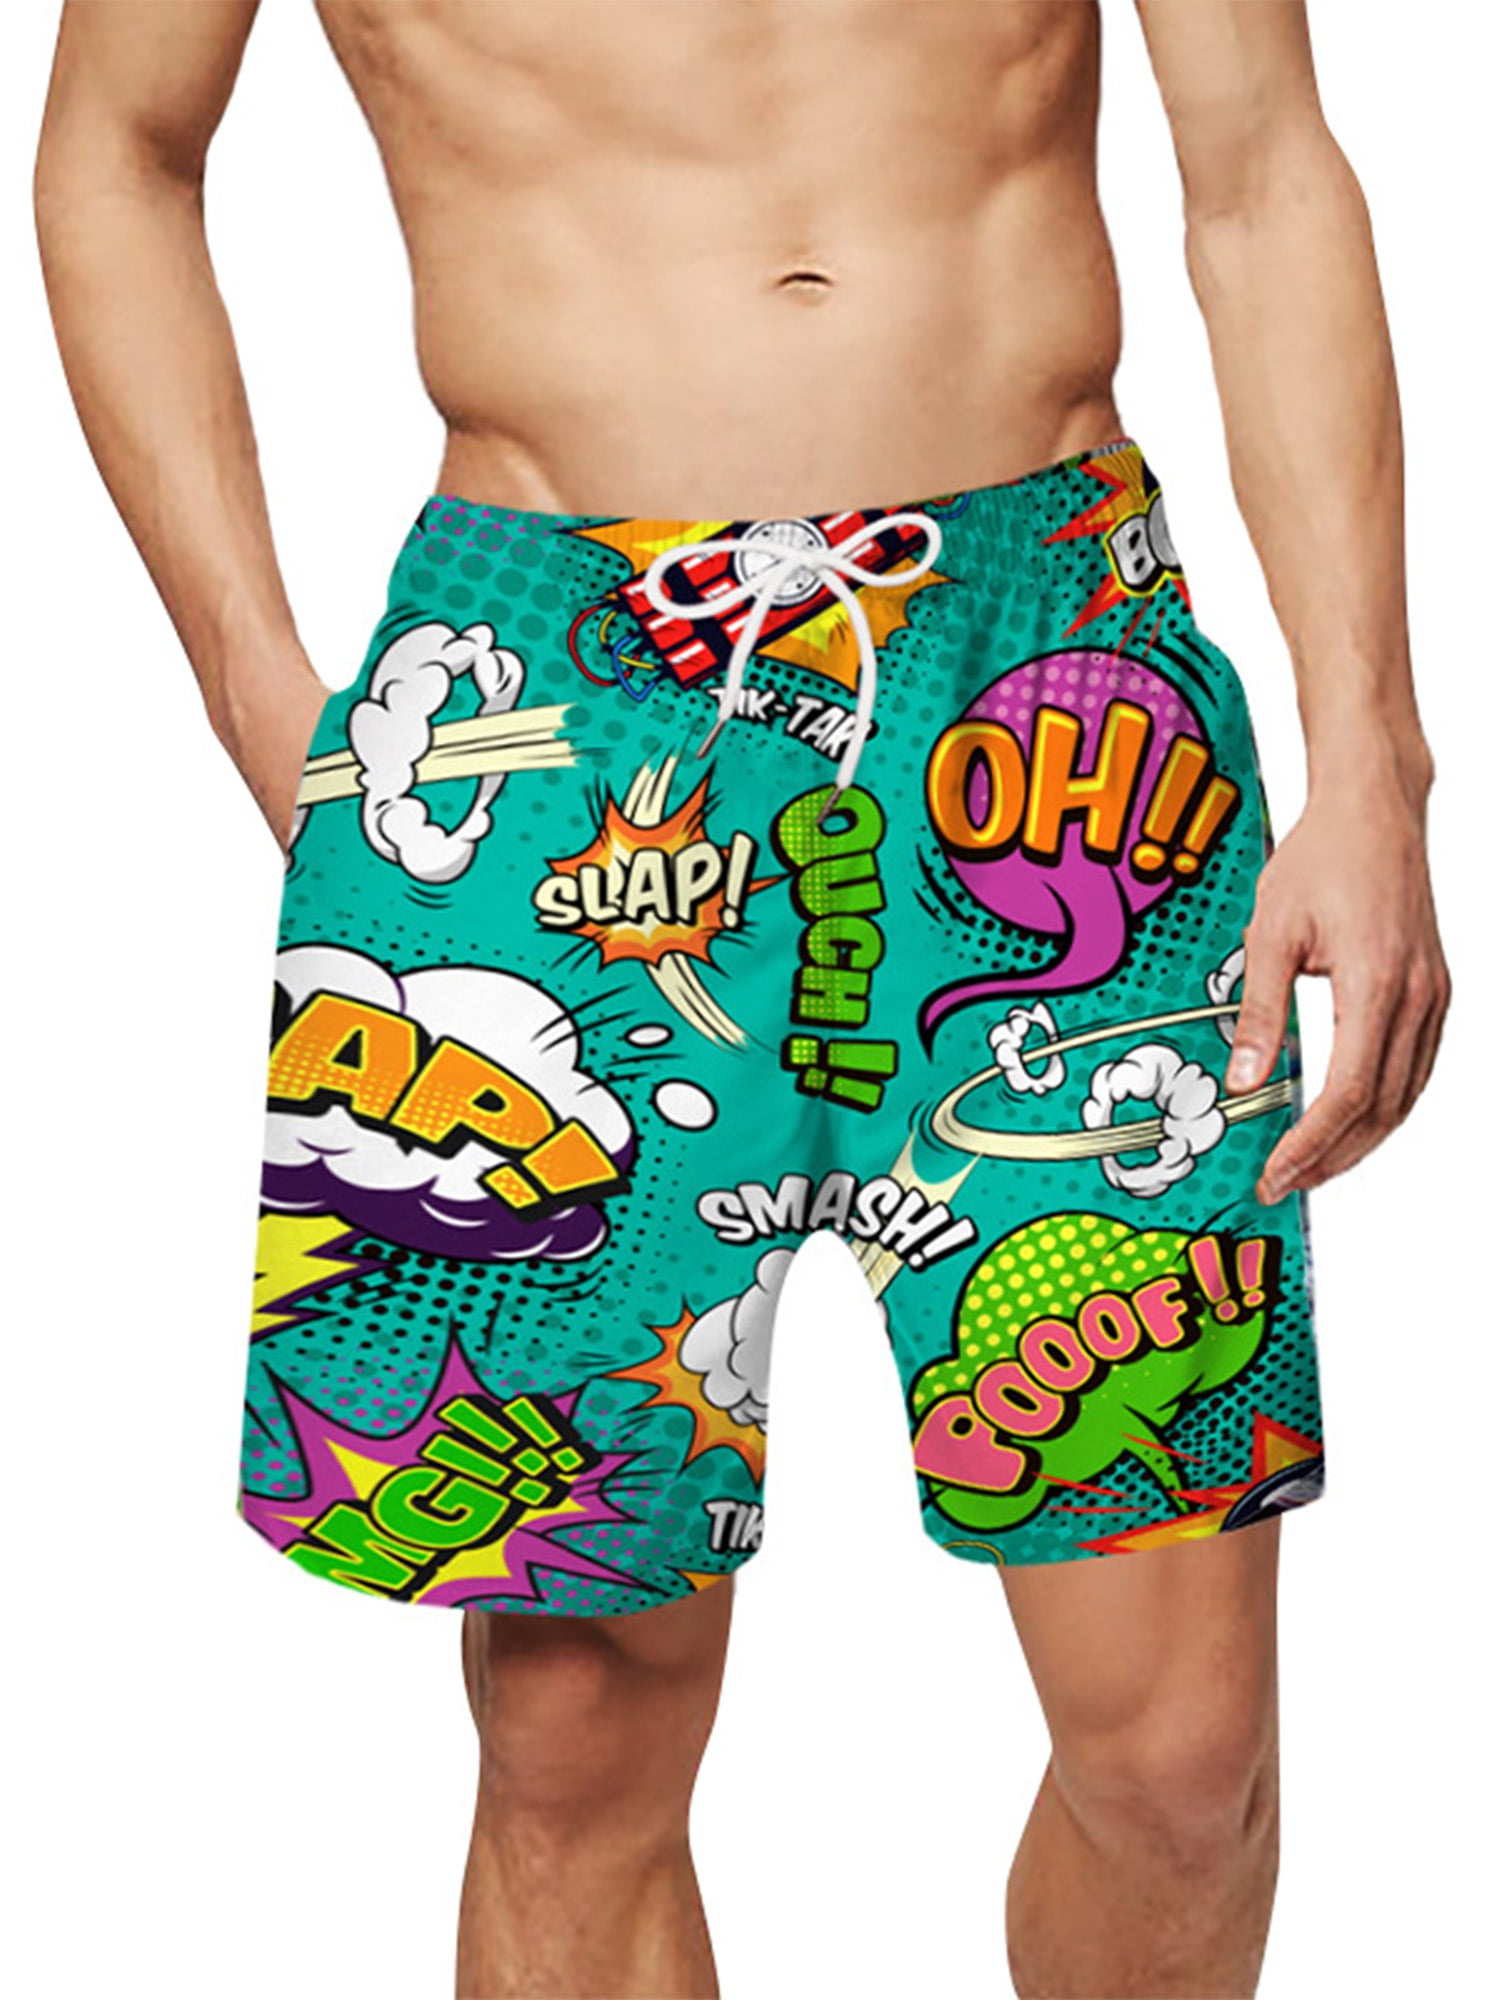 Handelier Pattern Print Swim Trunks Summer Beach Shorts Pockets Boardshorts for Men 